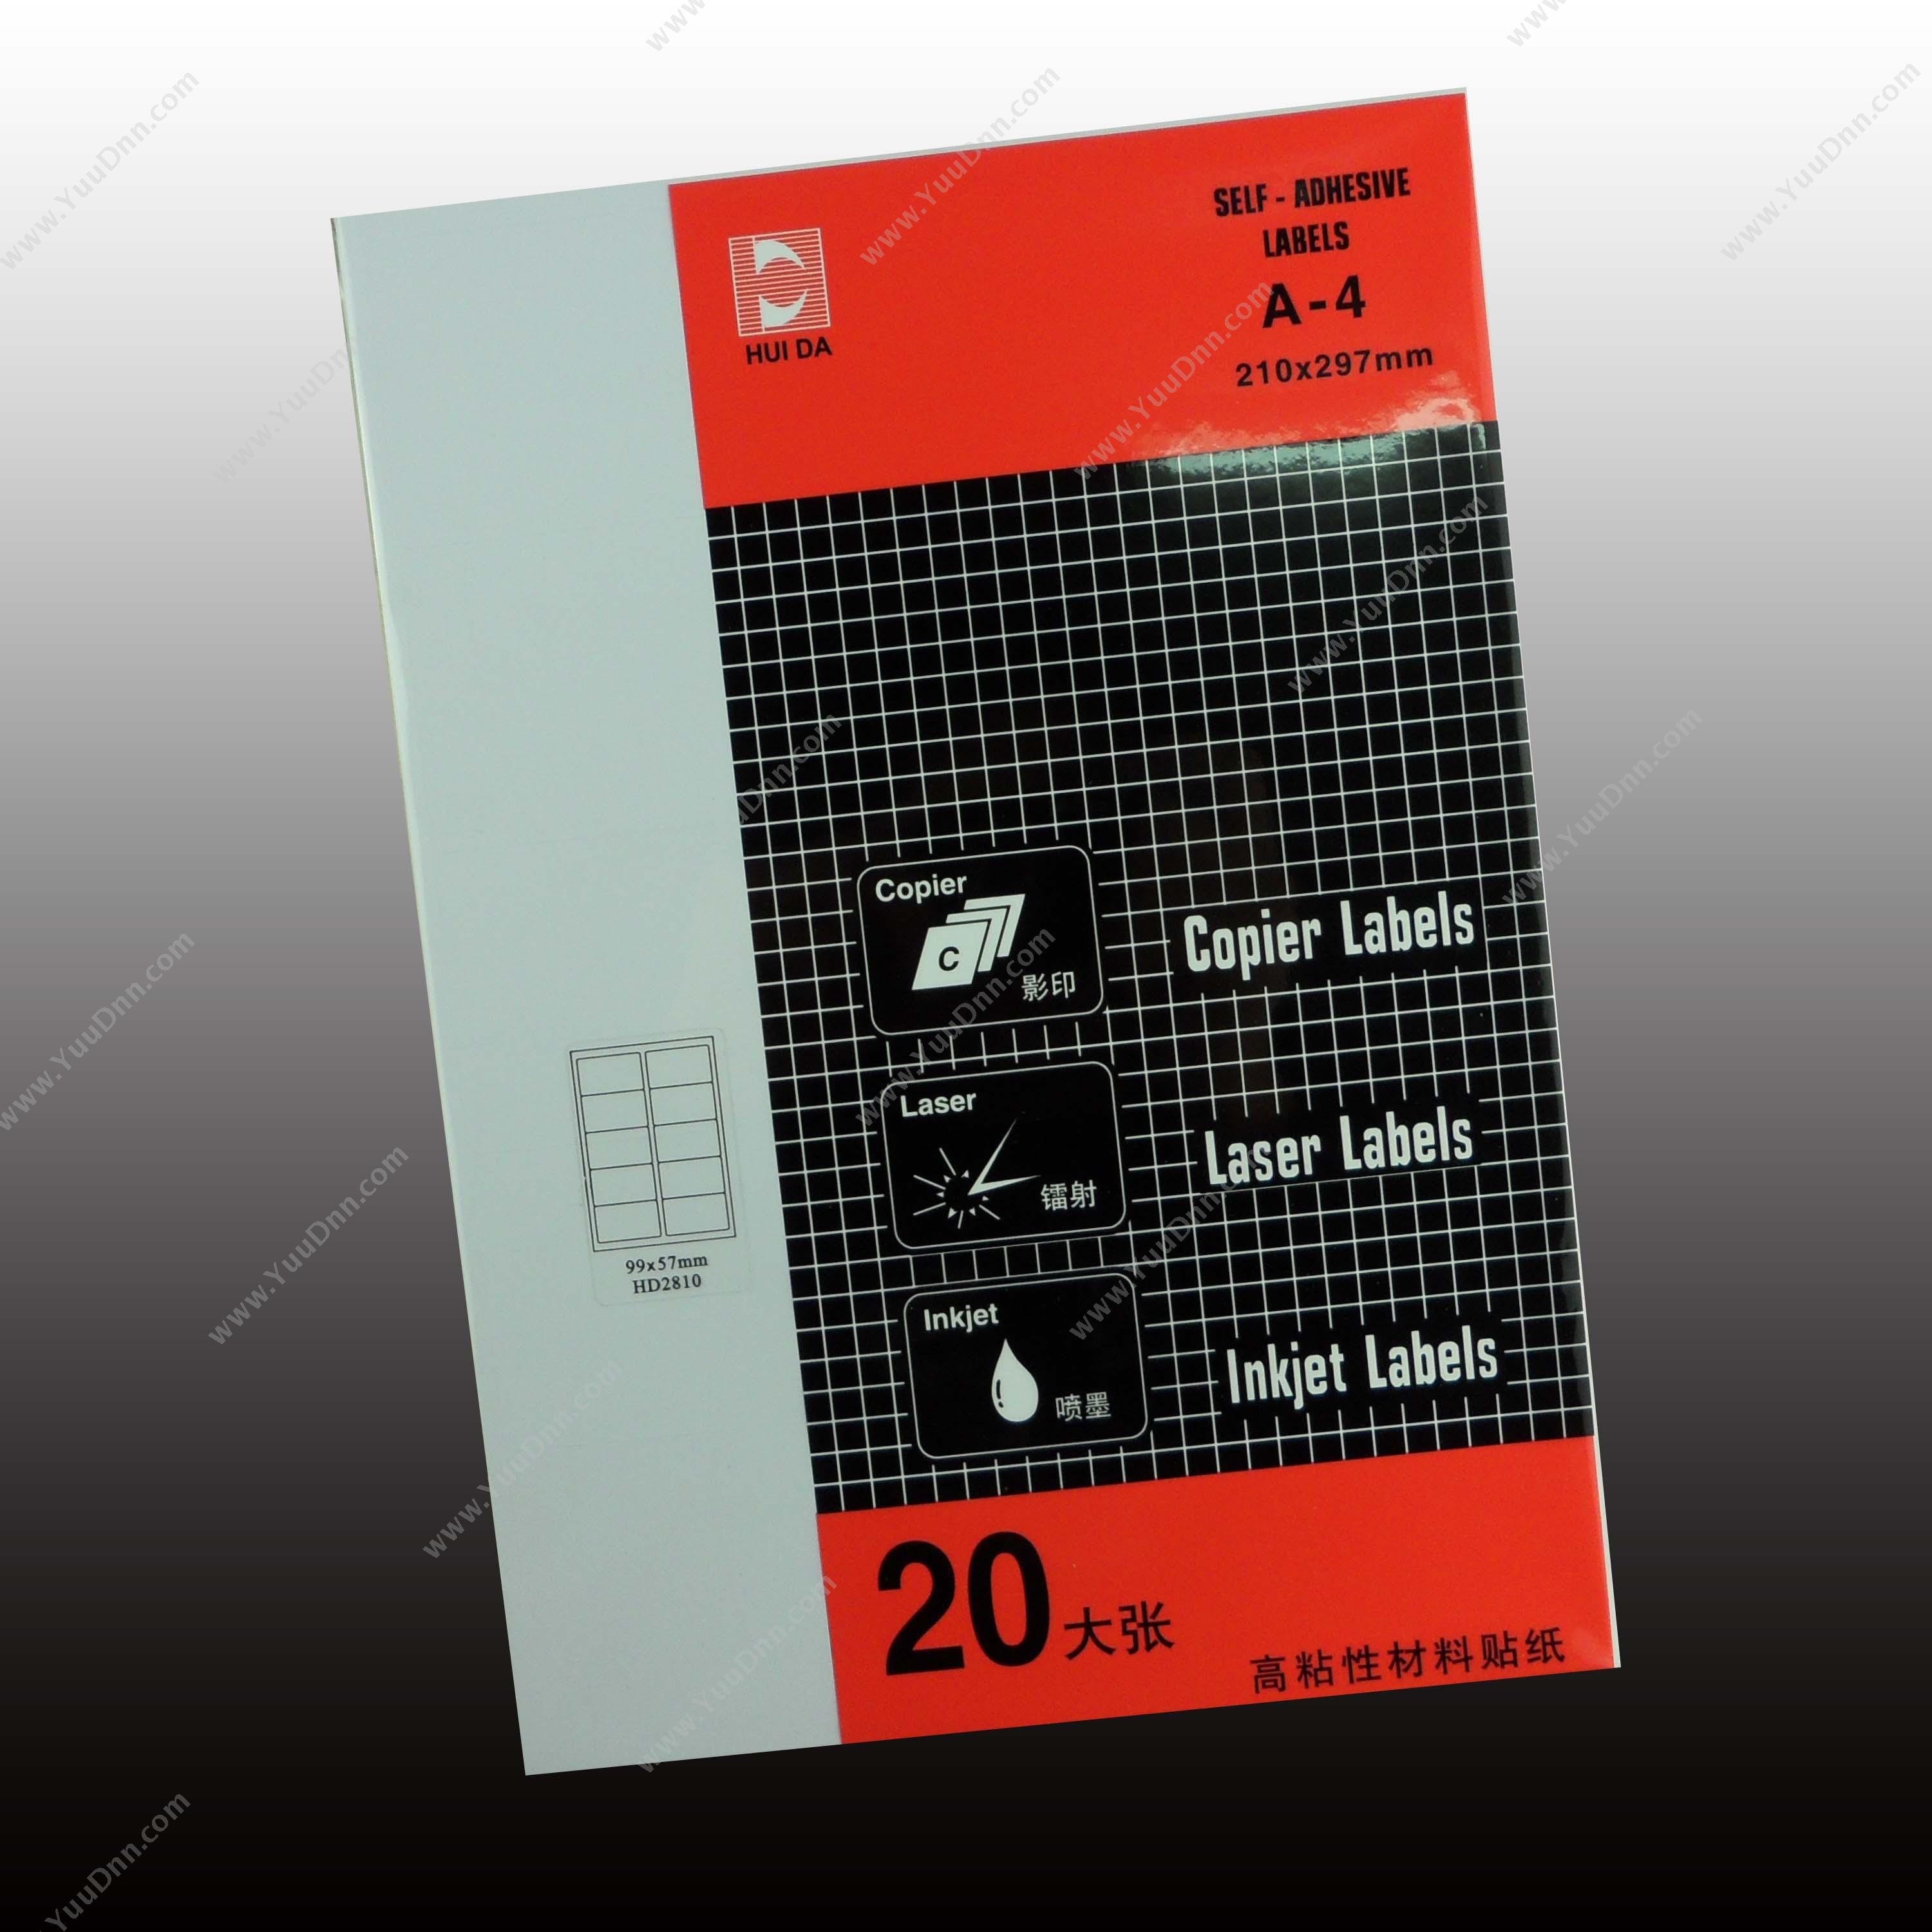 惠达 HuiDa HD-2810 打印标签 20张/包 99*57mm （白） 激光打印标签